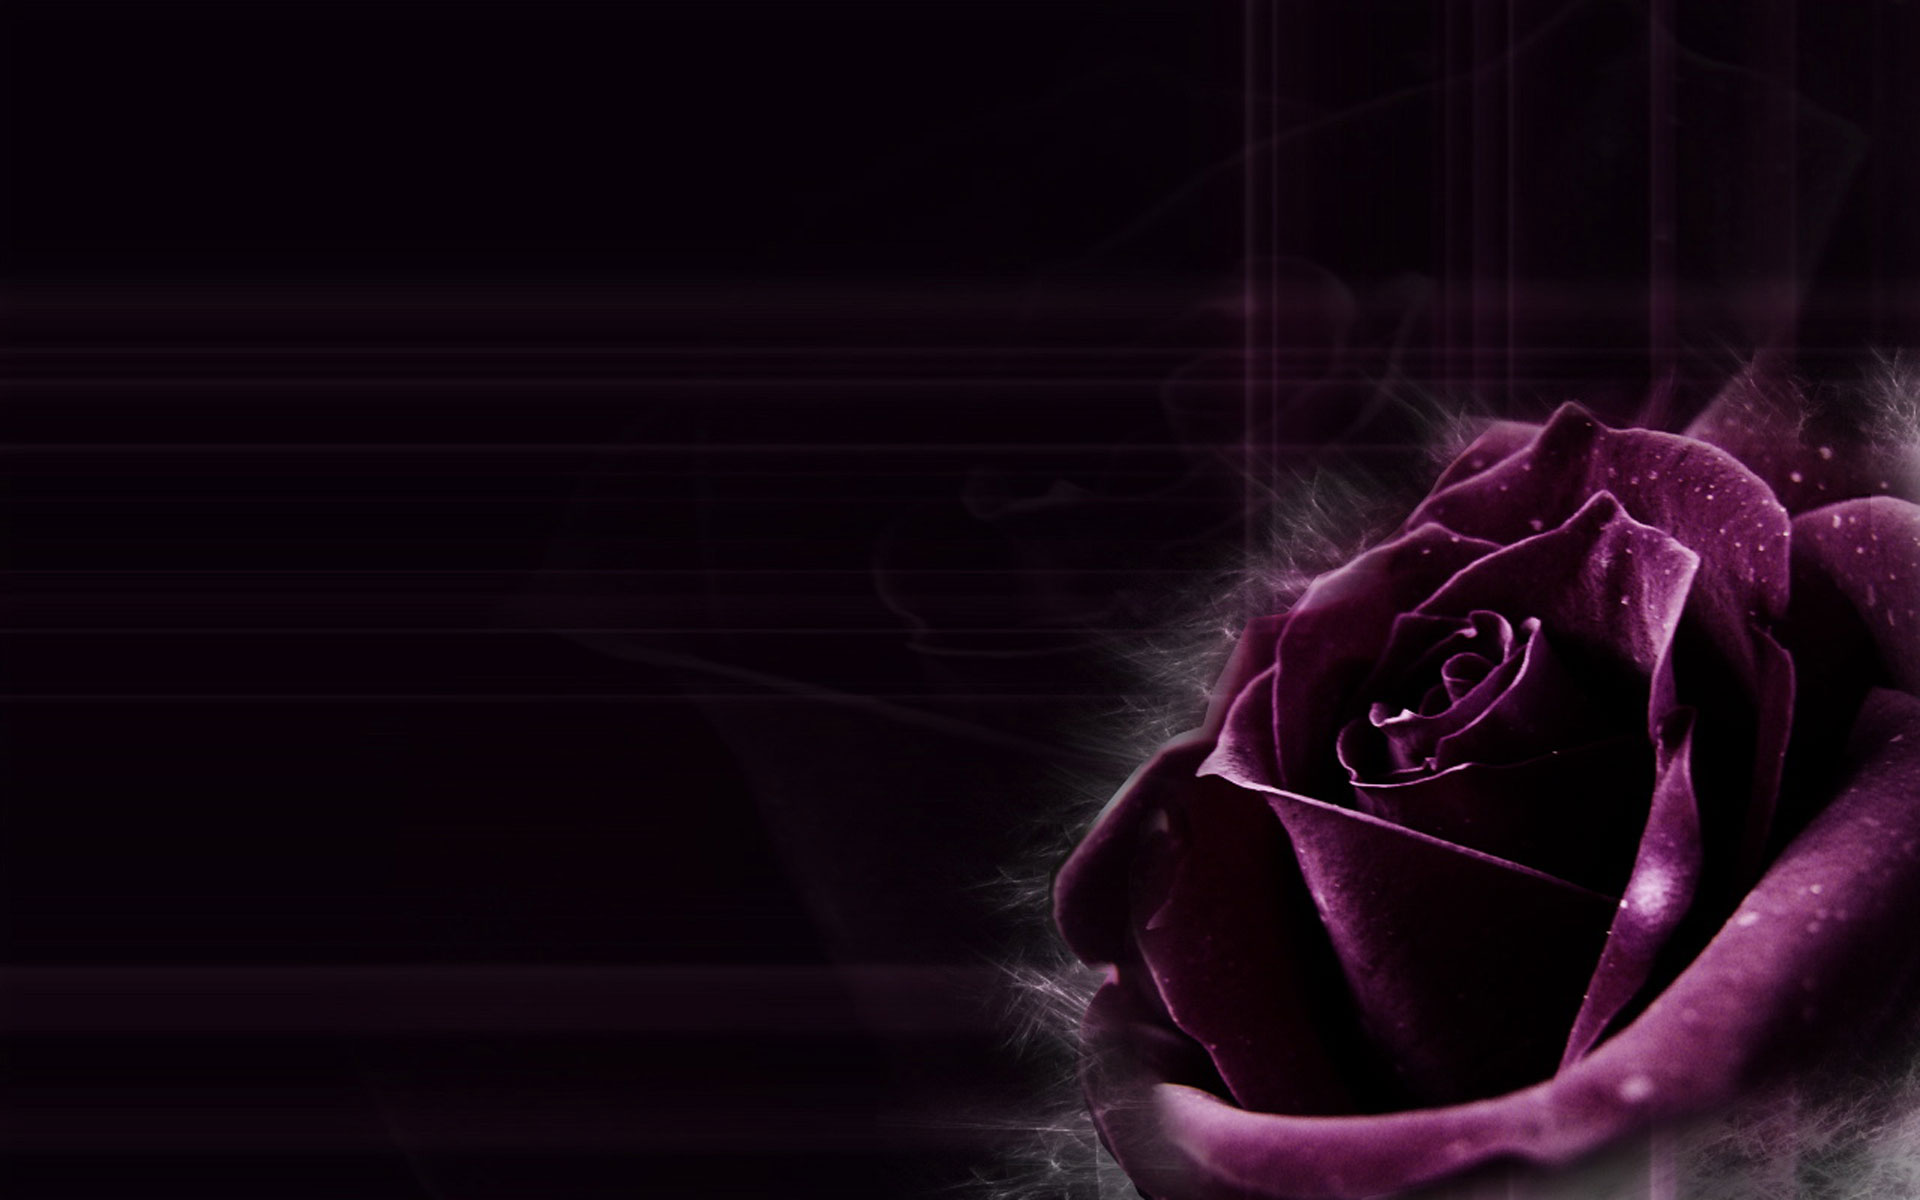  desktop background of dark purple rose the incense close up wallpaper